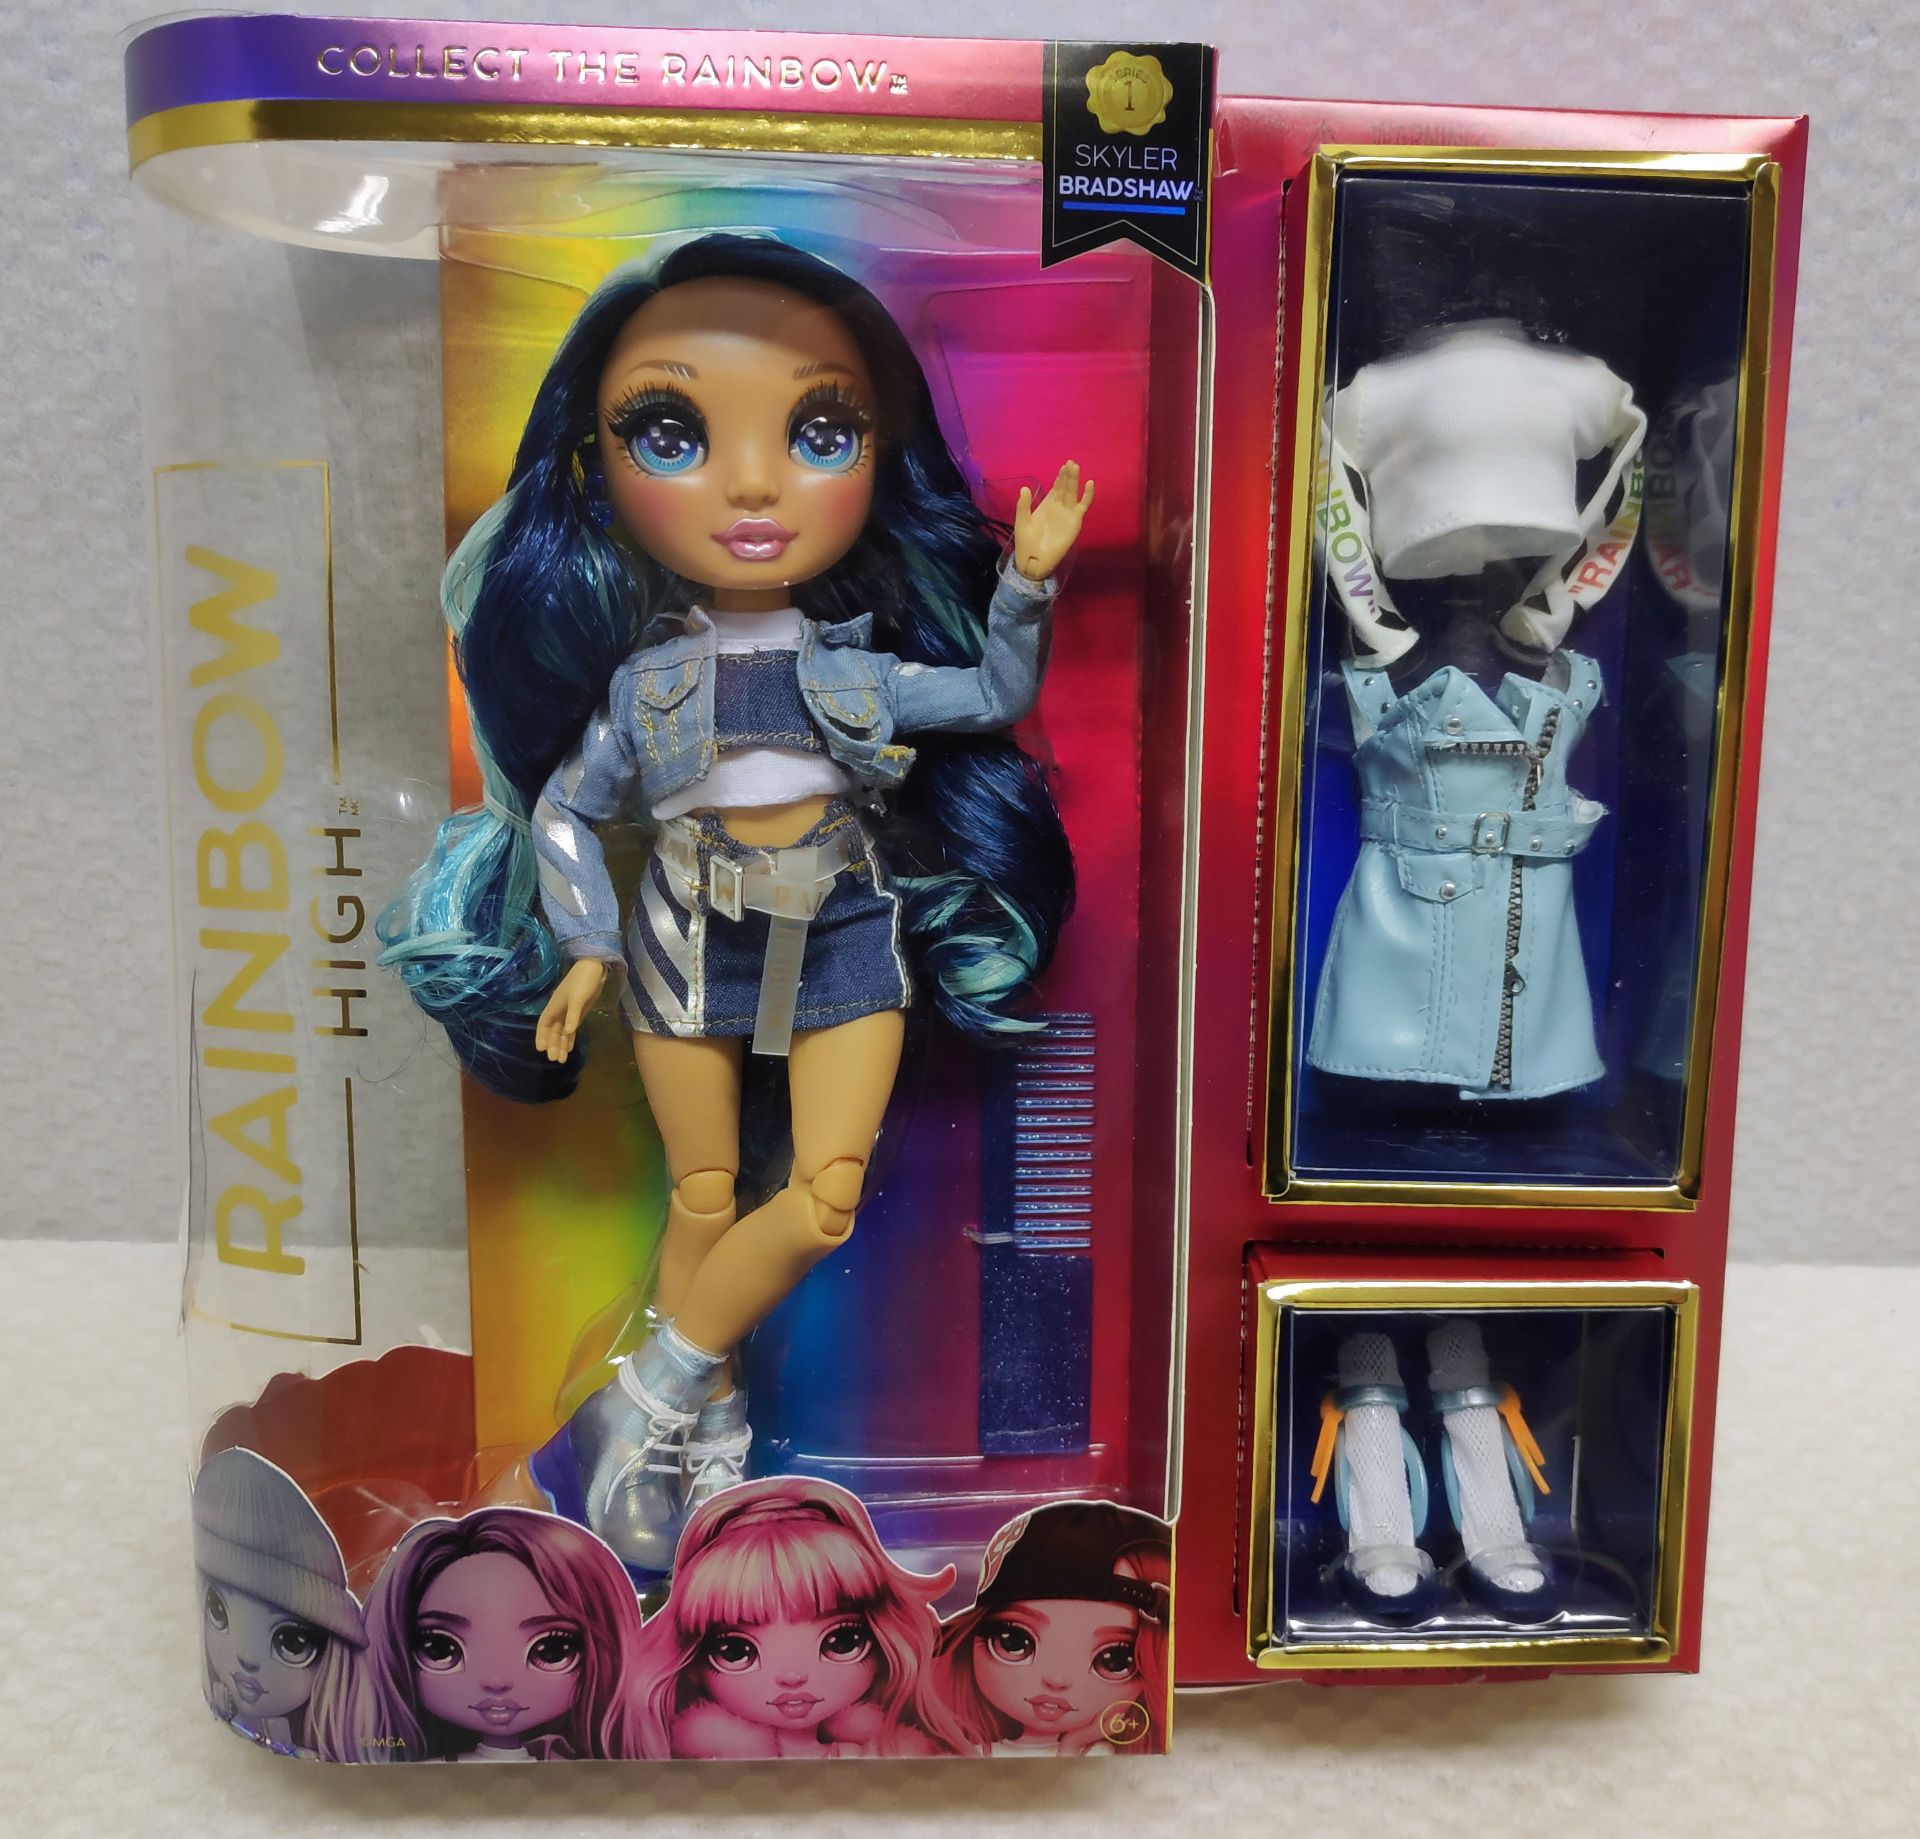 1 x Rainbow High Skyler Bradshaw Doll - New/Boxed - Image 4 of 8